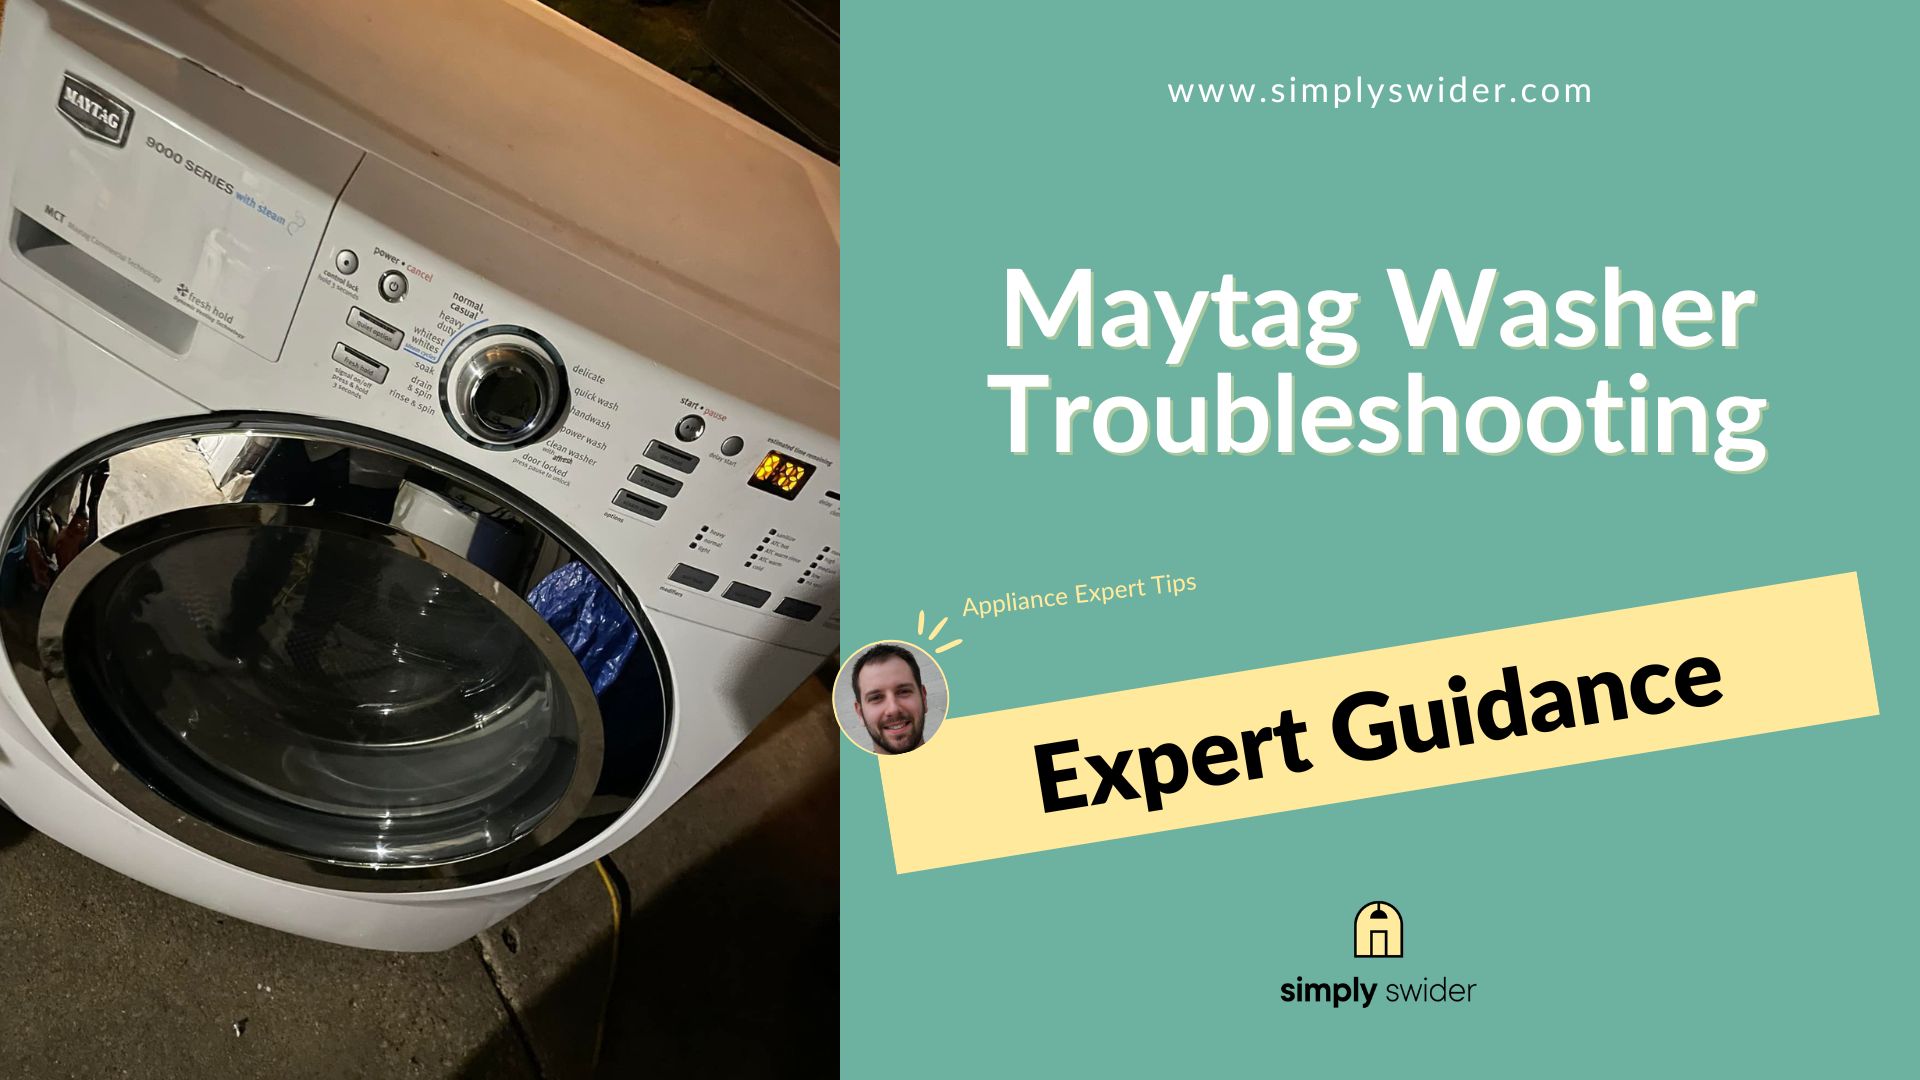 Maytag Washer Troubleshooting